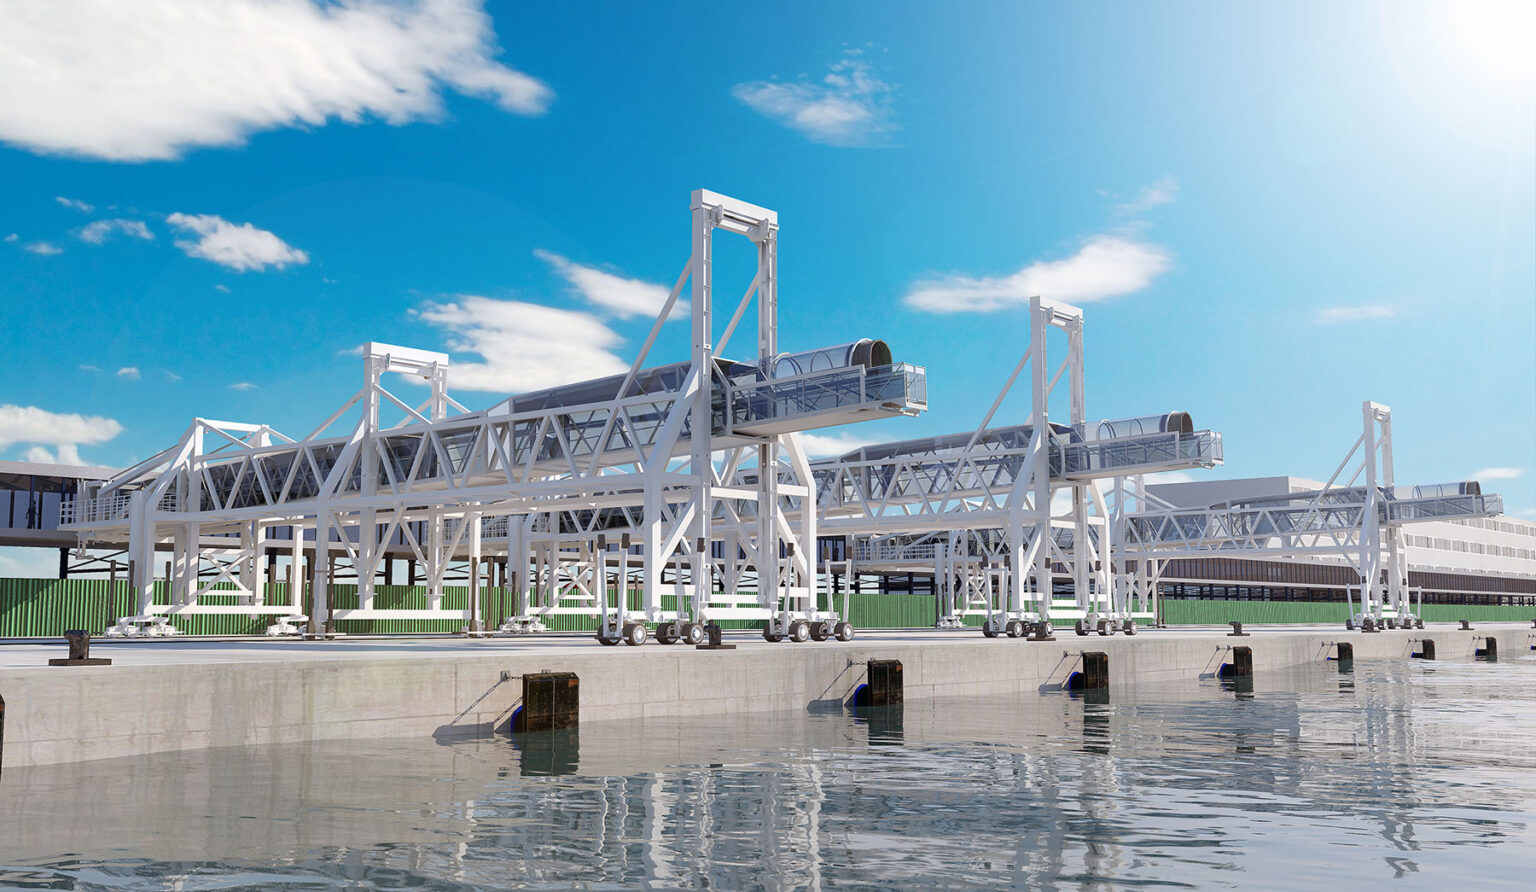 Bremenports selects ADELTE’s Seaport Passenger Boarding Bridges for the Columbus Cruise Center in Bremerhaven (February 2022)